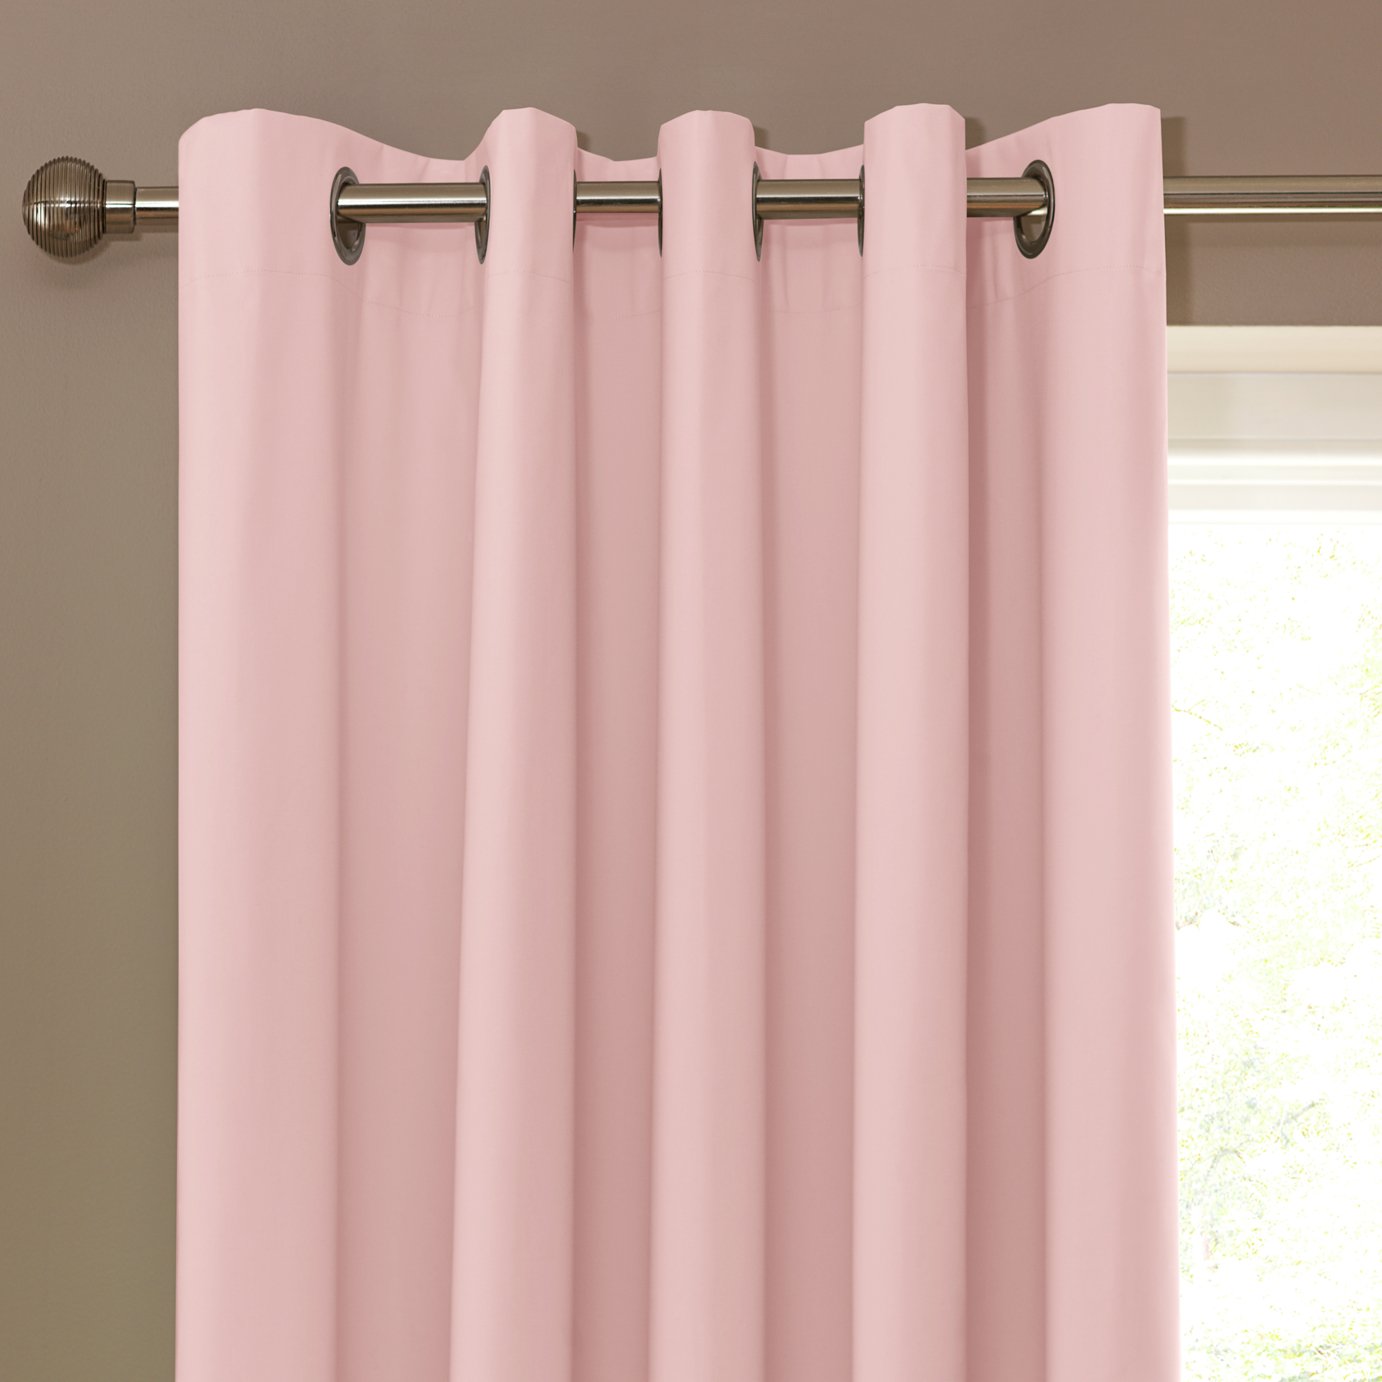 Habitat Plain Blackout Eyelet Curtains - Blush Pink